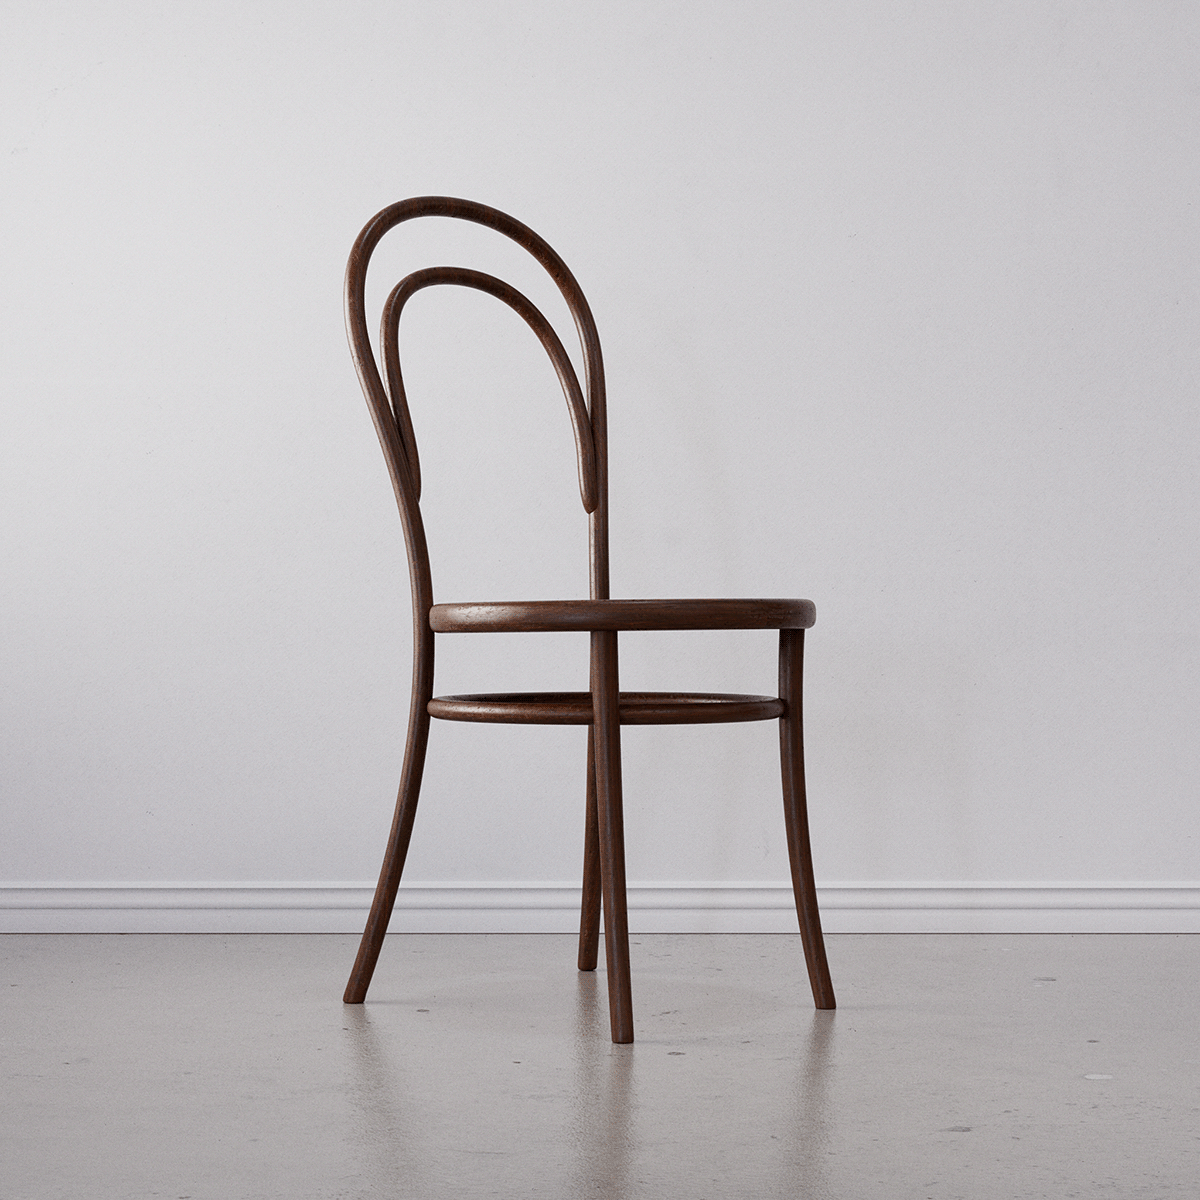 chairs chairs design furniture design 3D architecture Render visualization interior design  CGI